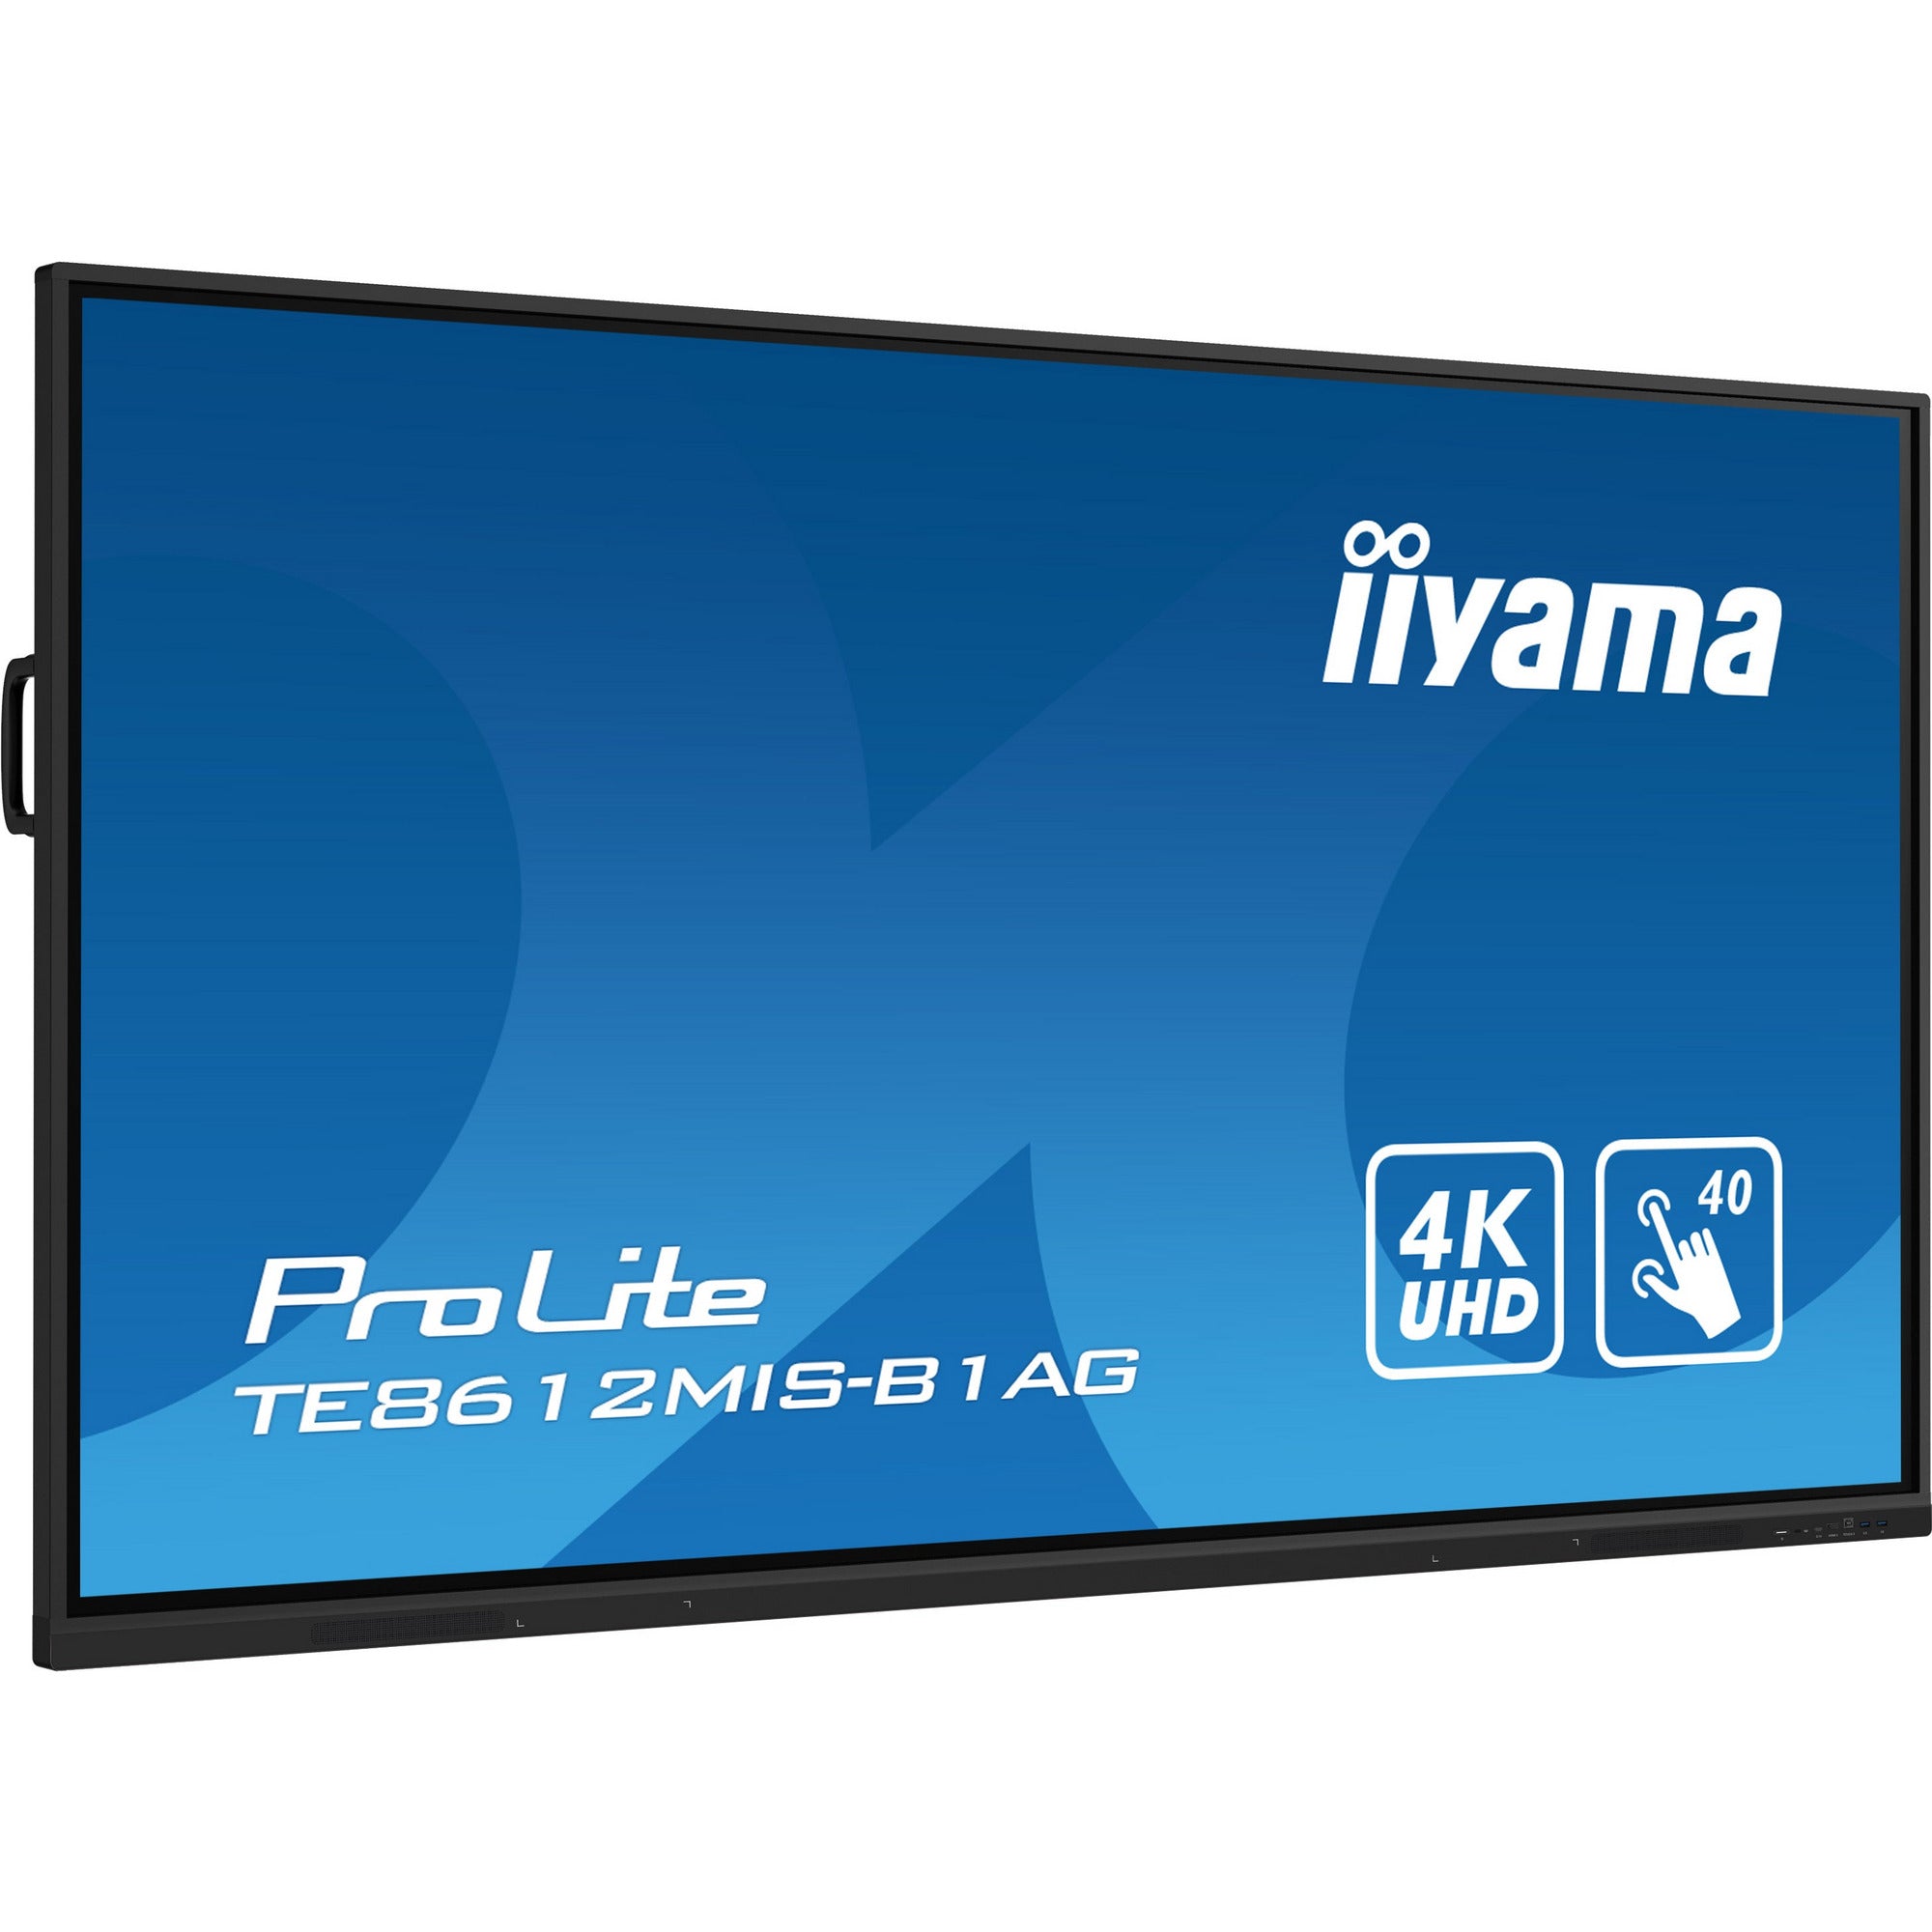 Iiyama ProLite TE8612MIS-B1AG 86" Interactive 4K UHD Touchscreen with User Profiles Software